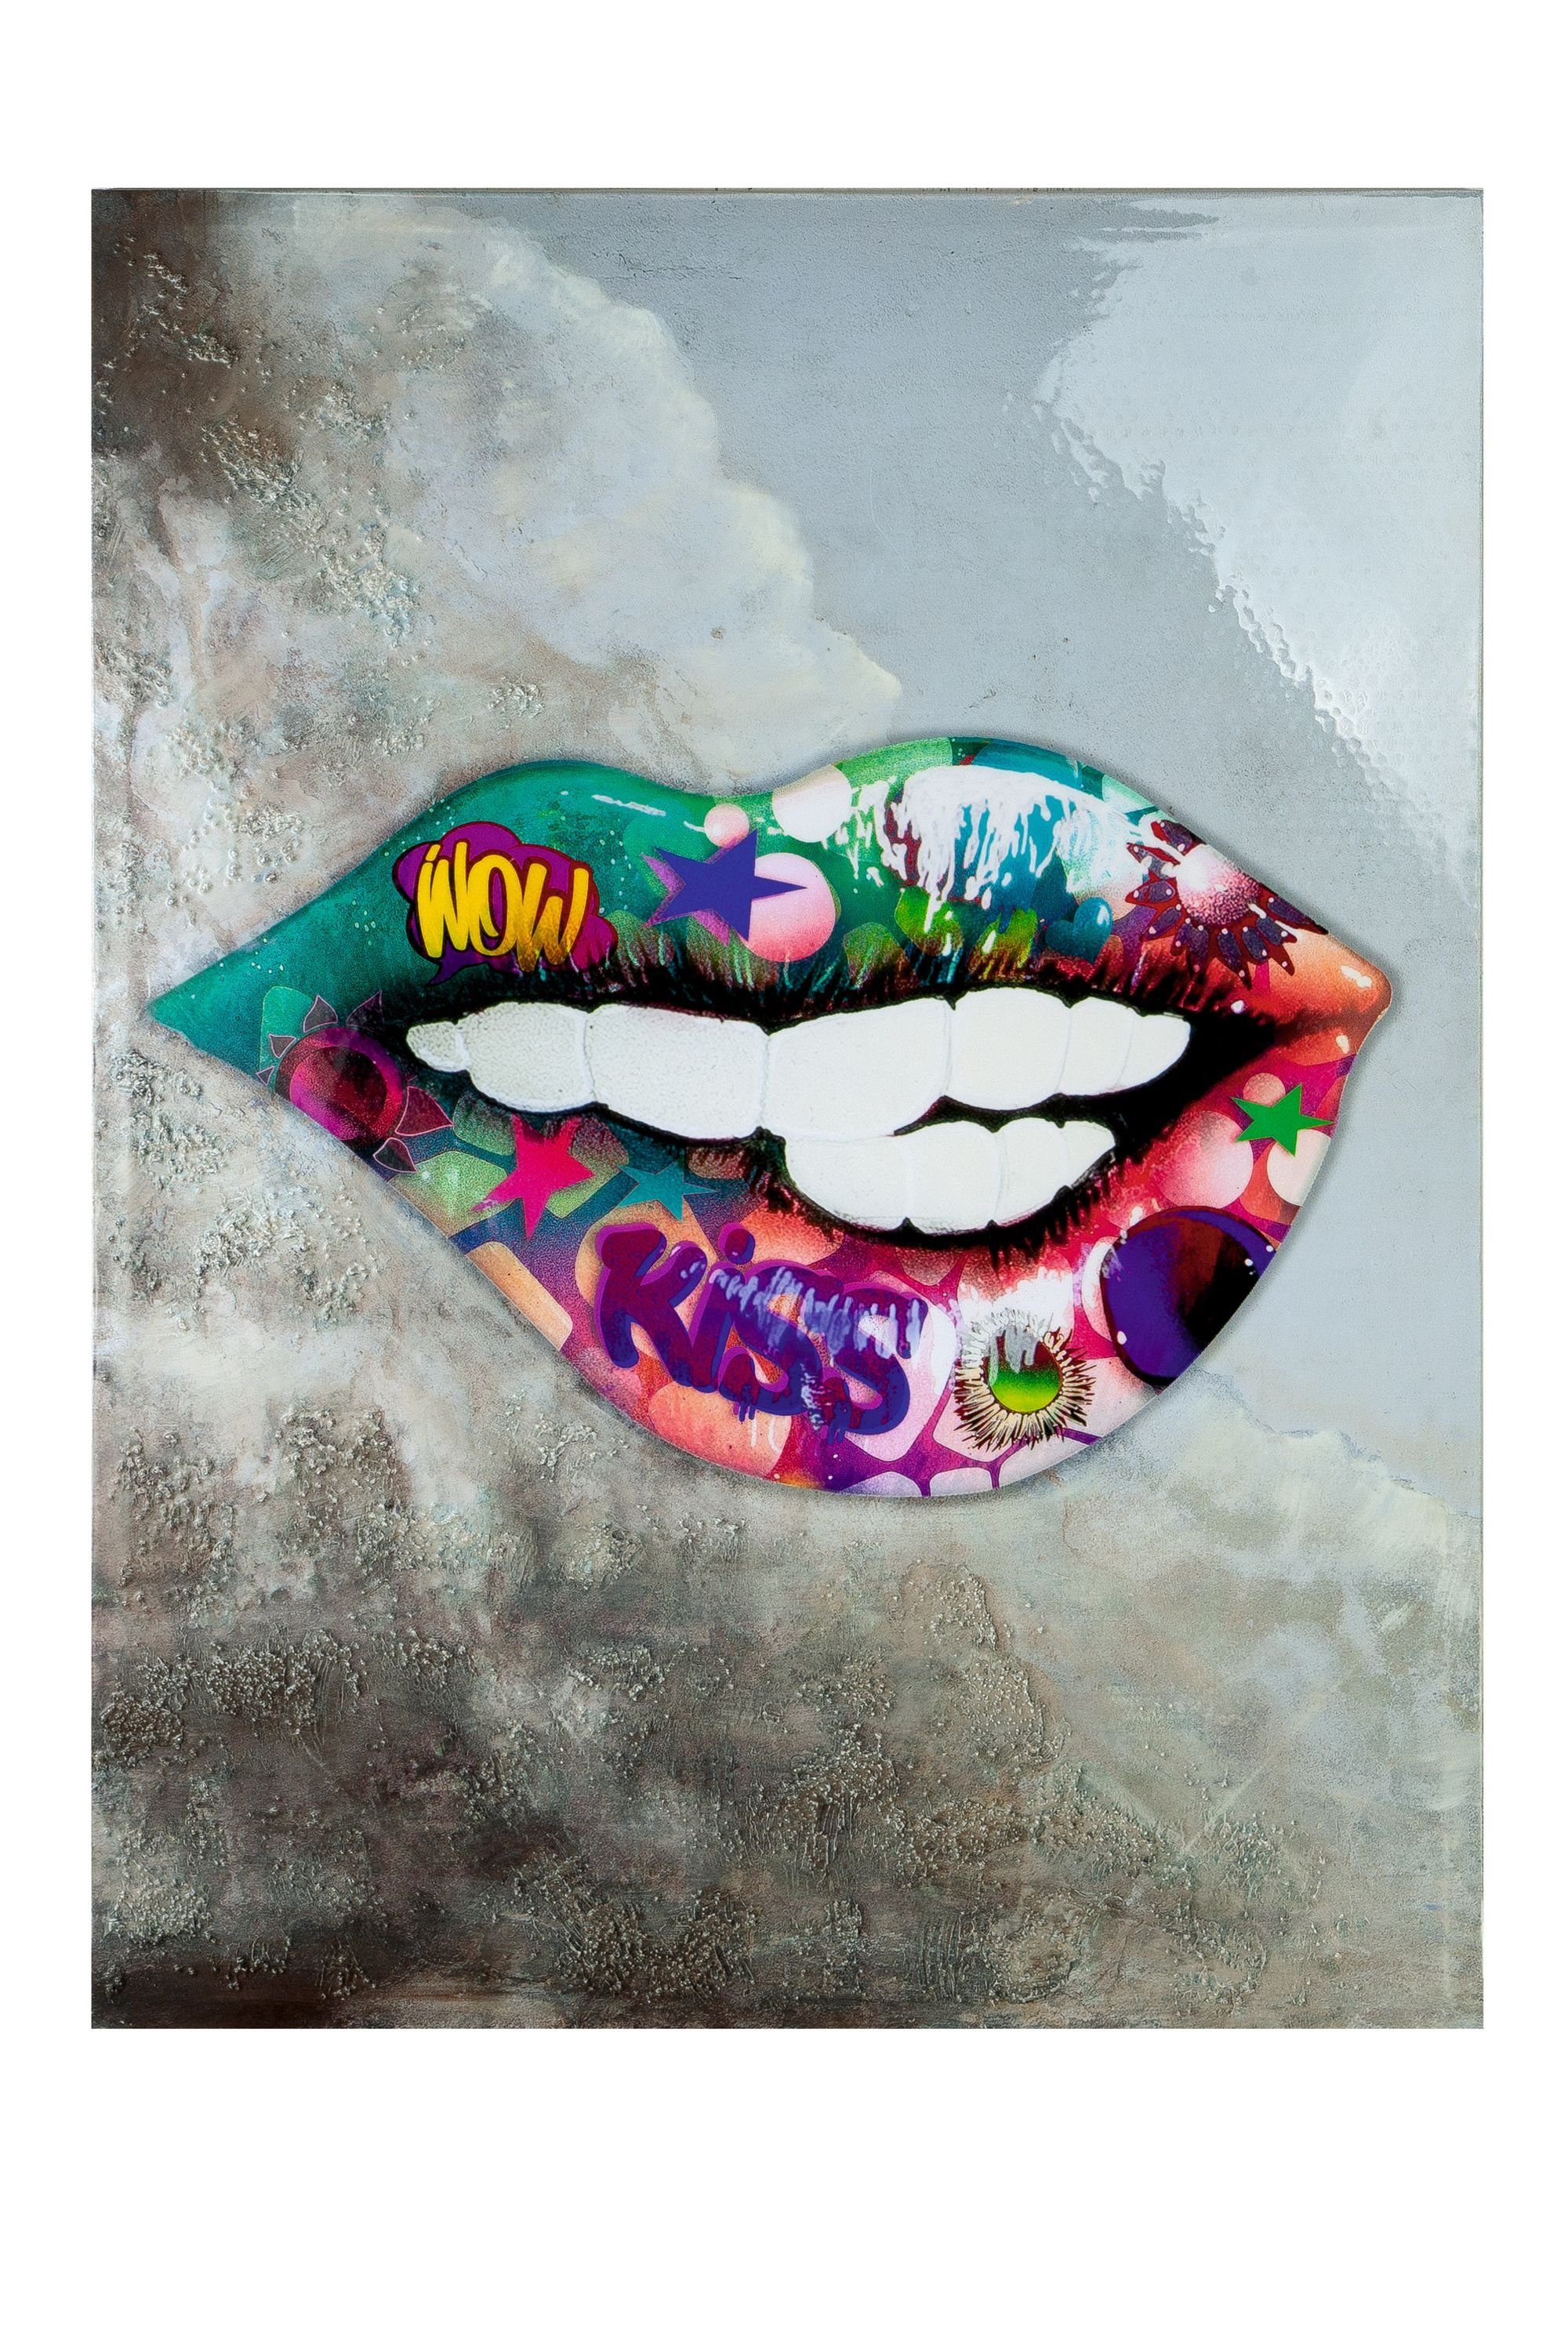 GILDE Bild B. Art Kiss - Gemälde 90cm - mehrfarbig H. 120cm Street x GILDE